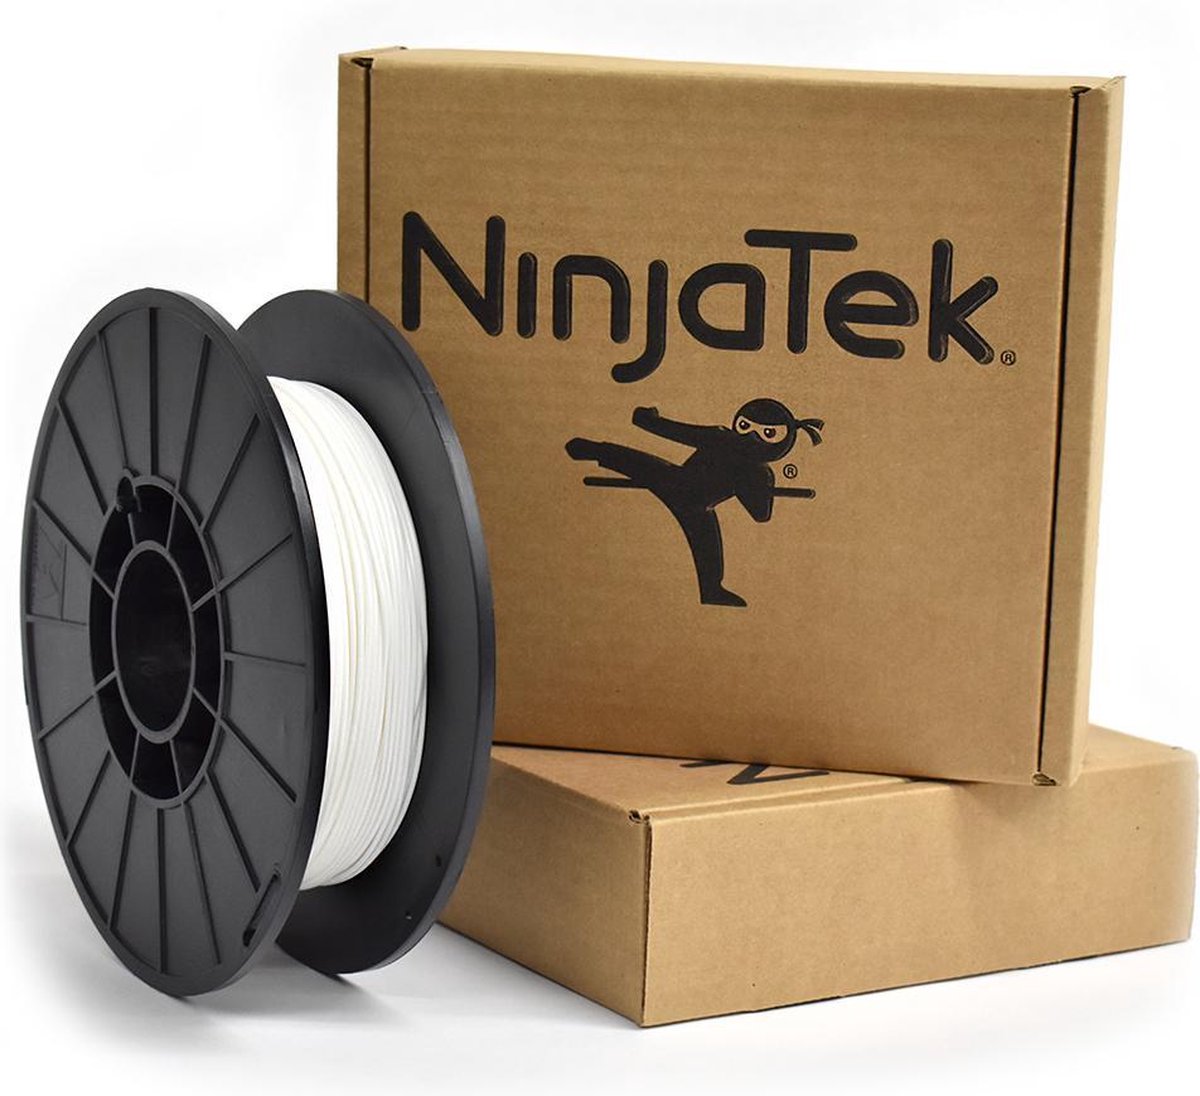 NinjaFlex Filament - 1.75mm - 0.5 kg - Snow White